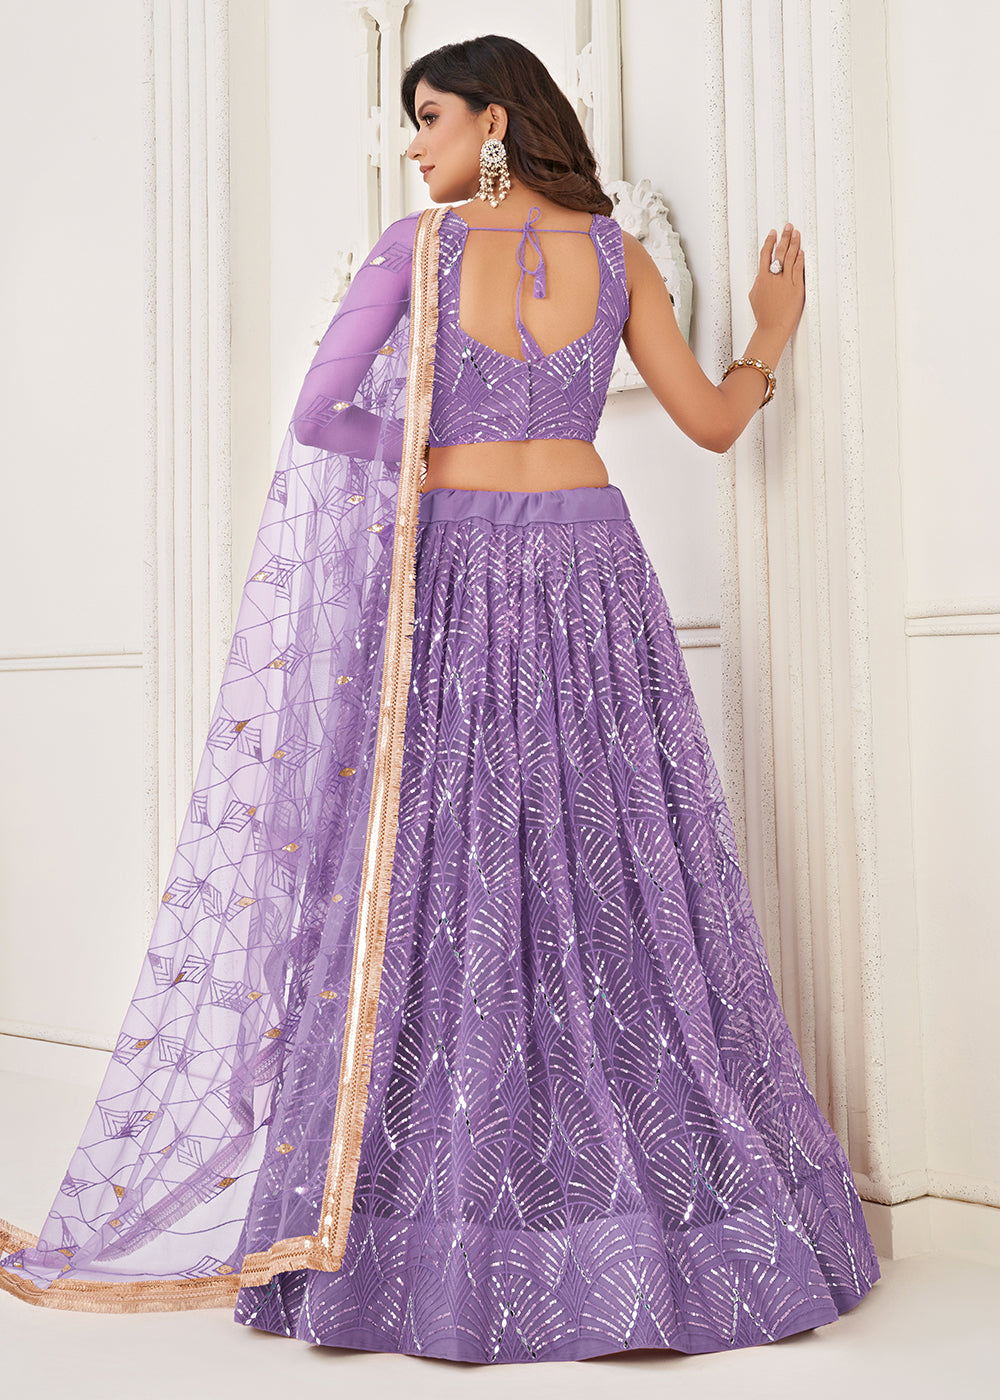 Buy Now Embroidered Net Lavender Sangeet & Mehndi Wedding Lehenga Choli Online in USA, UK, Canada & Worldwide at Empress Clothing. 